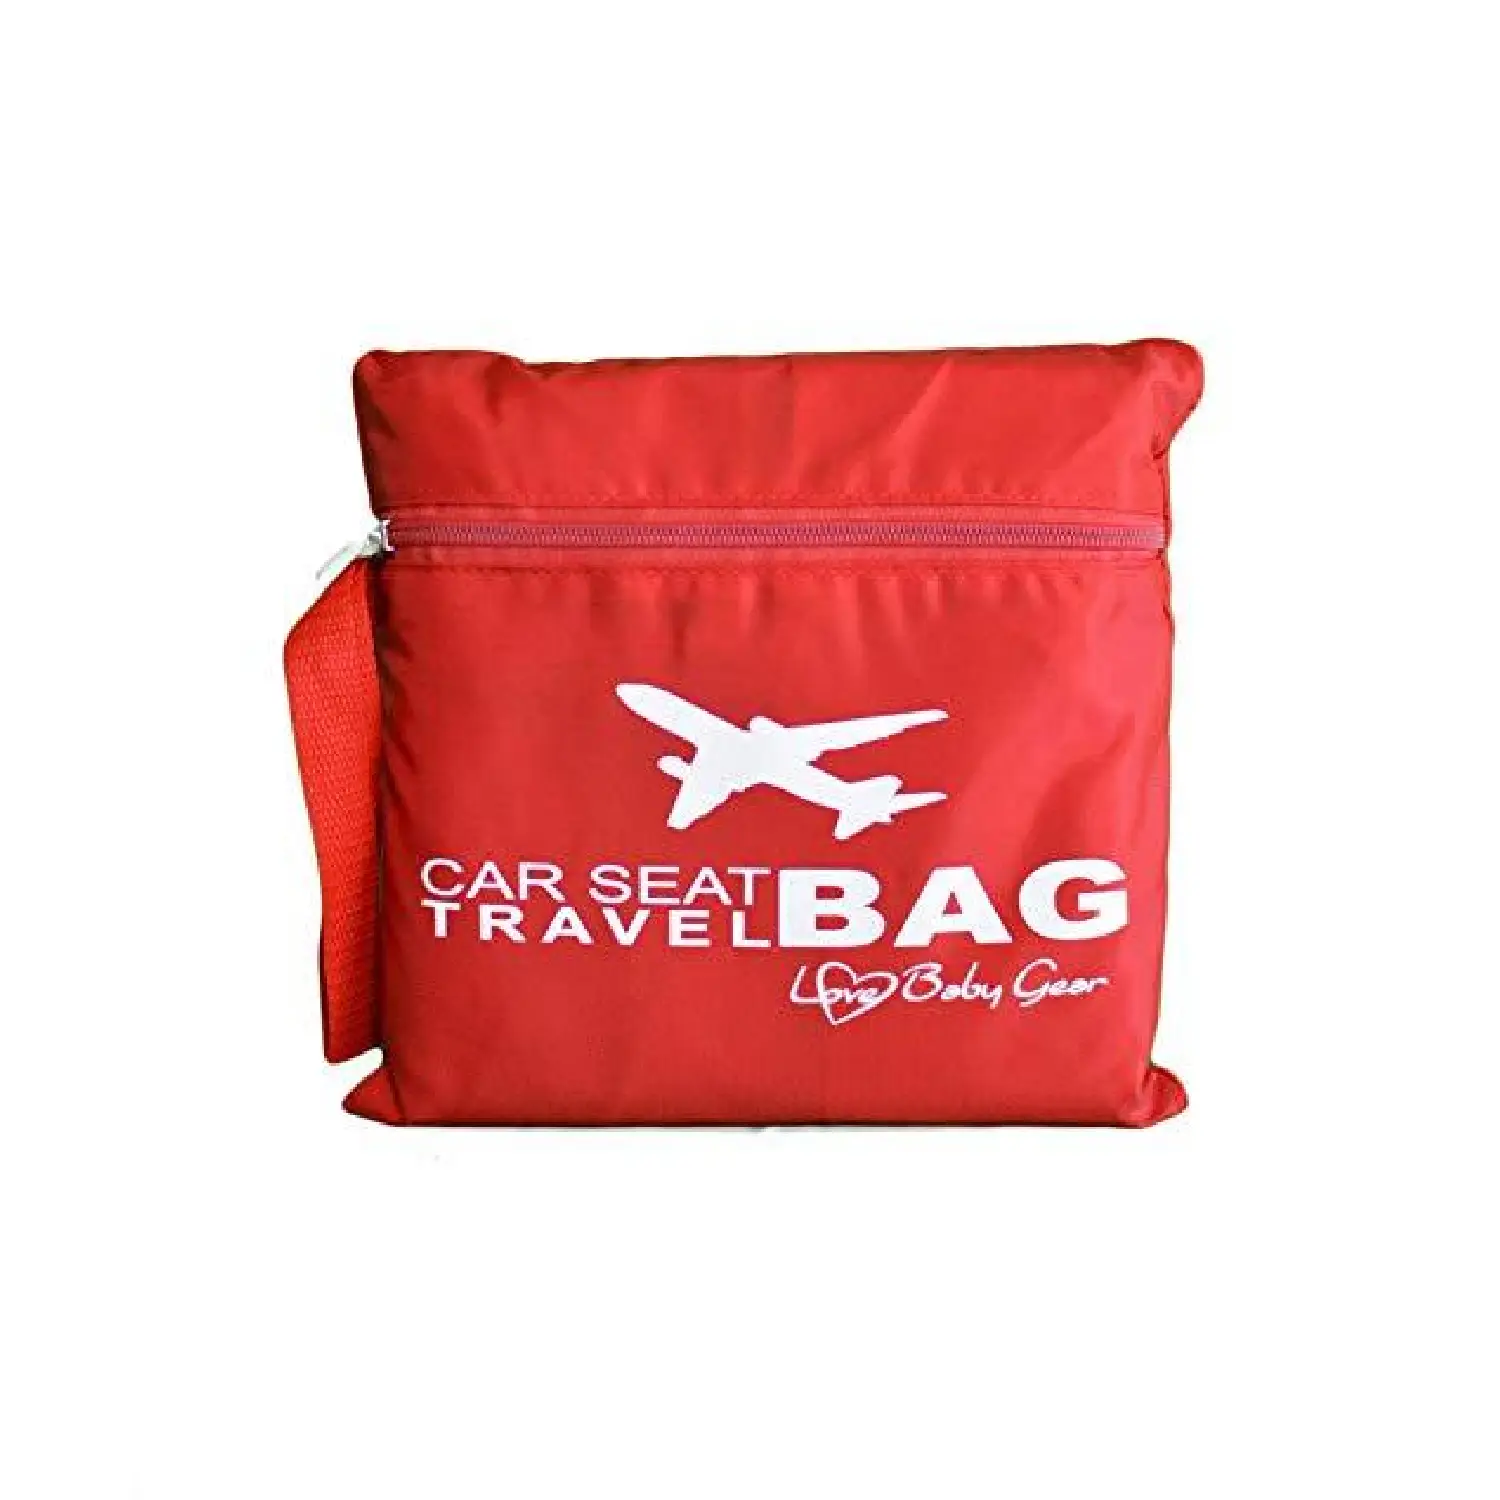 Love Baby Gear Ballistic Nylon Car Seat Travel Bag